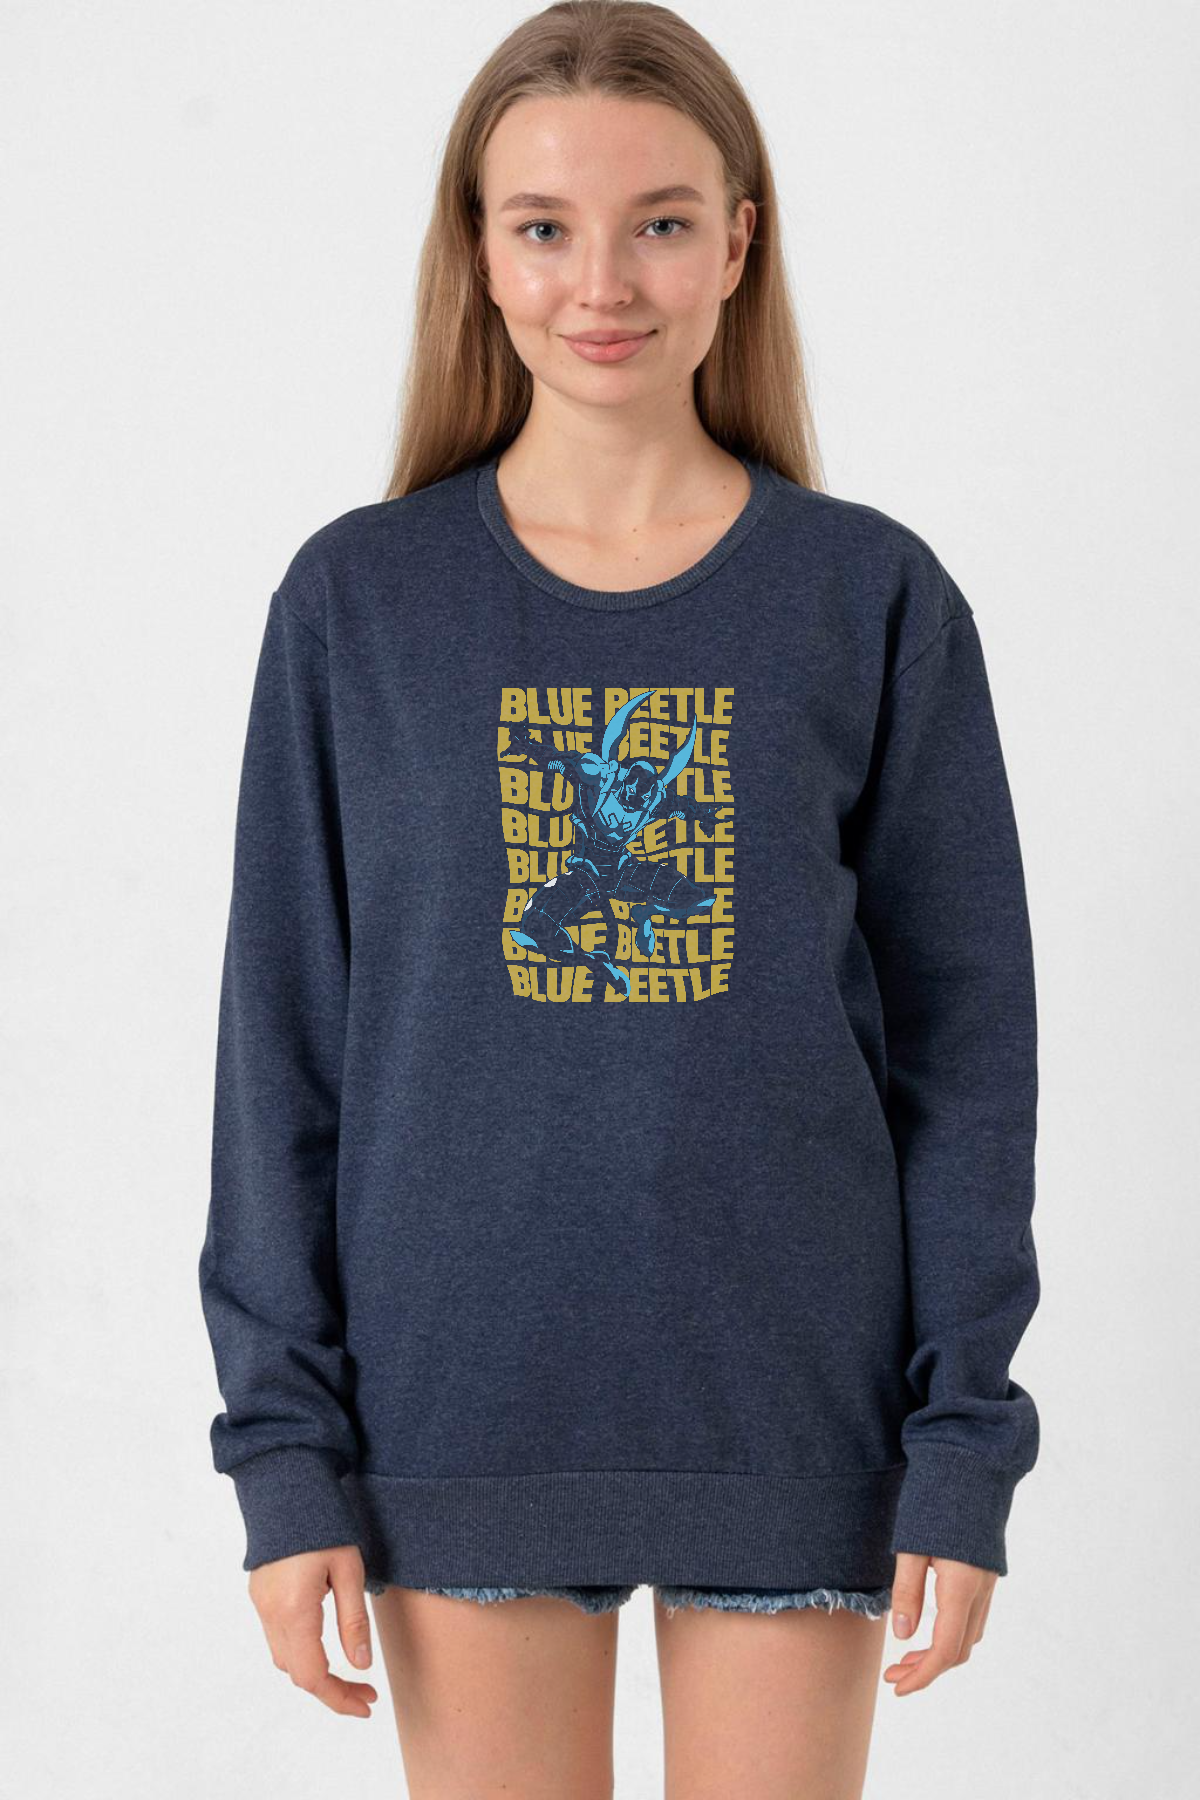 Blue Beetle Lettern İndigo Kadın 2ip Sweatshirt